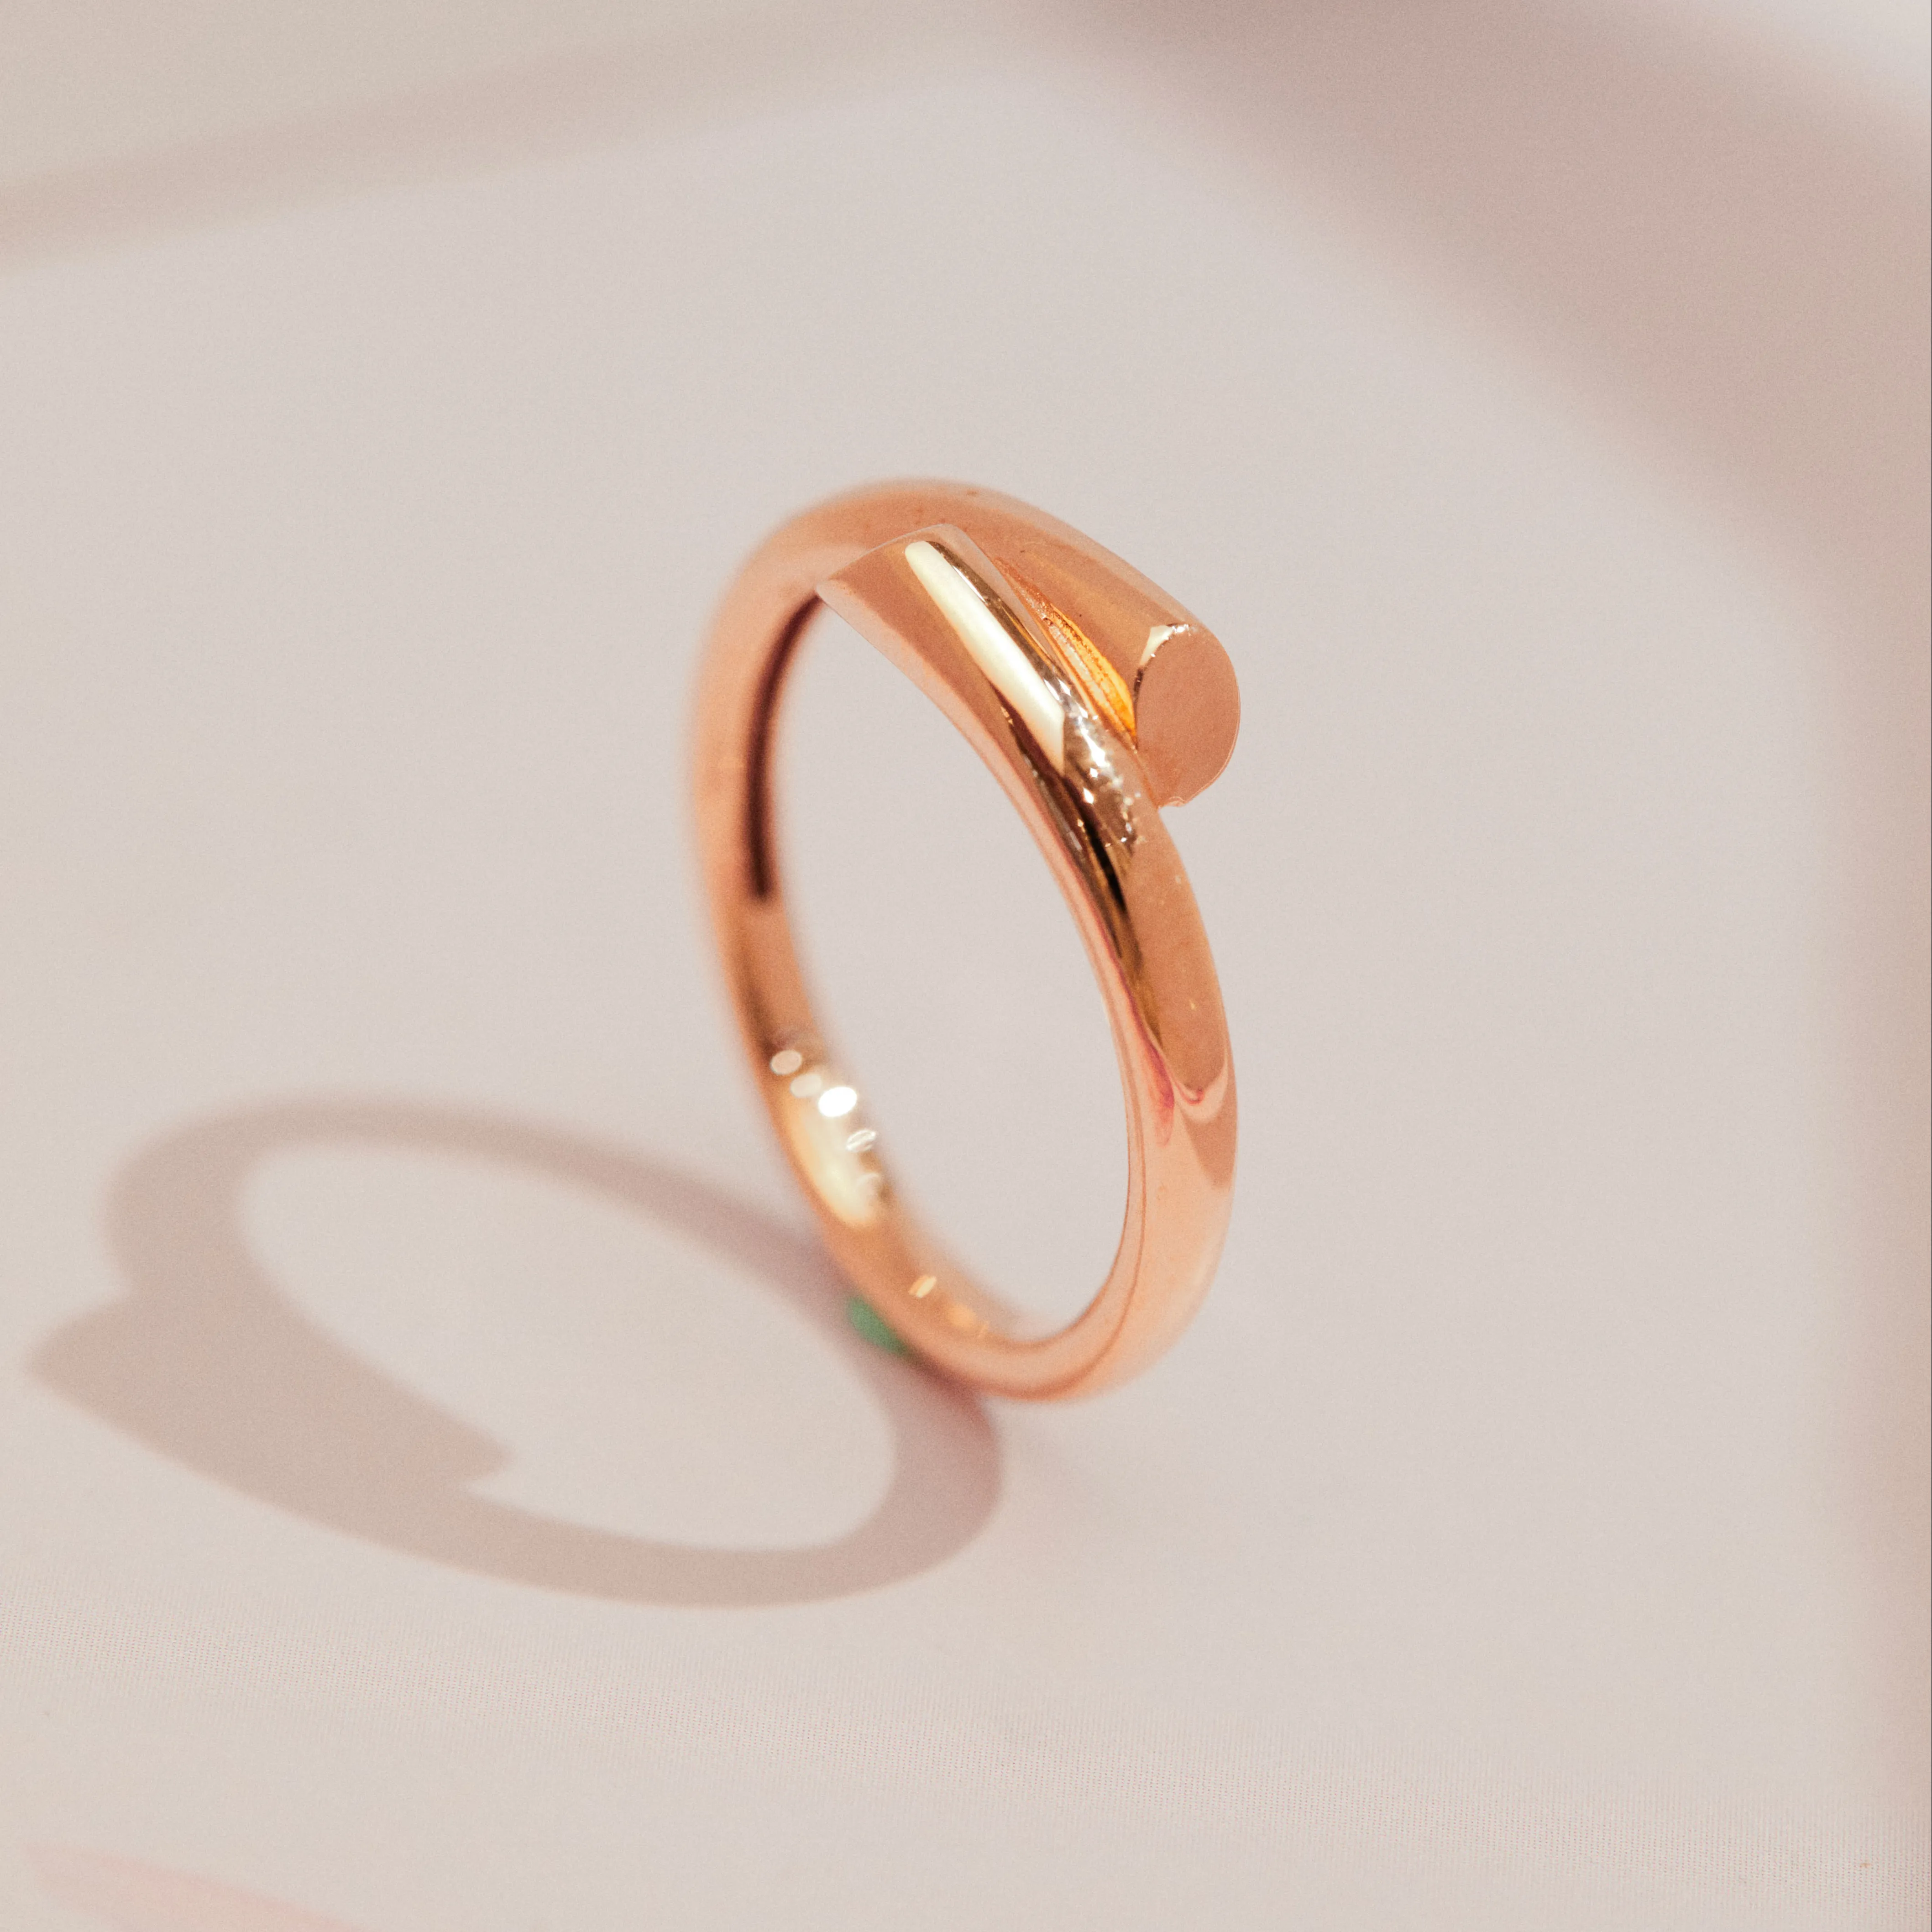 Atacado de alta qualidade tendência 10k 14k 18k casamento ouro genuíno meninas anel de ouro real anel moderno conjunto masculino clássico em branco